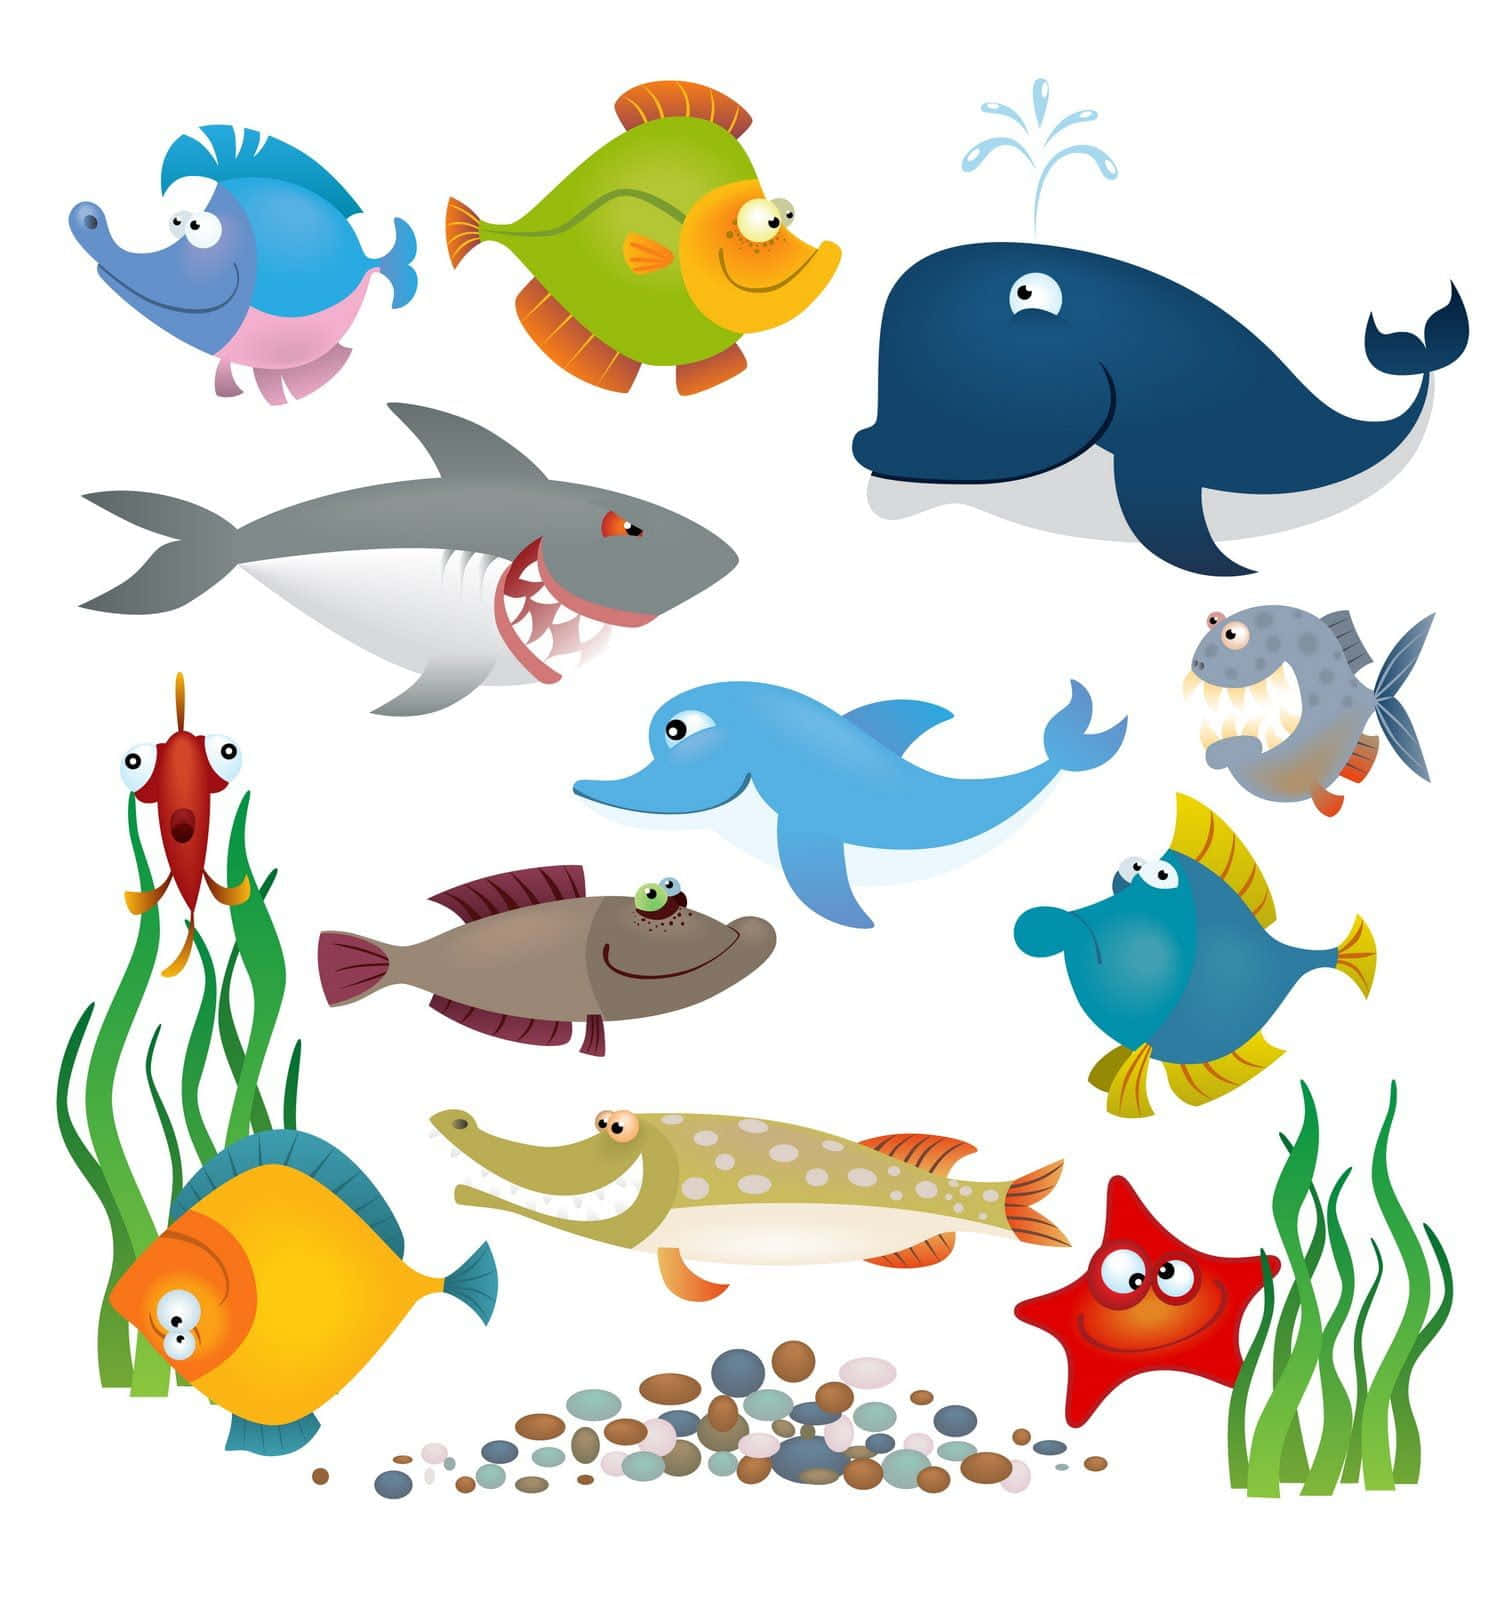 Cute Kawaii Sea Creatures Playing Together Wallpaper